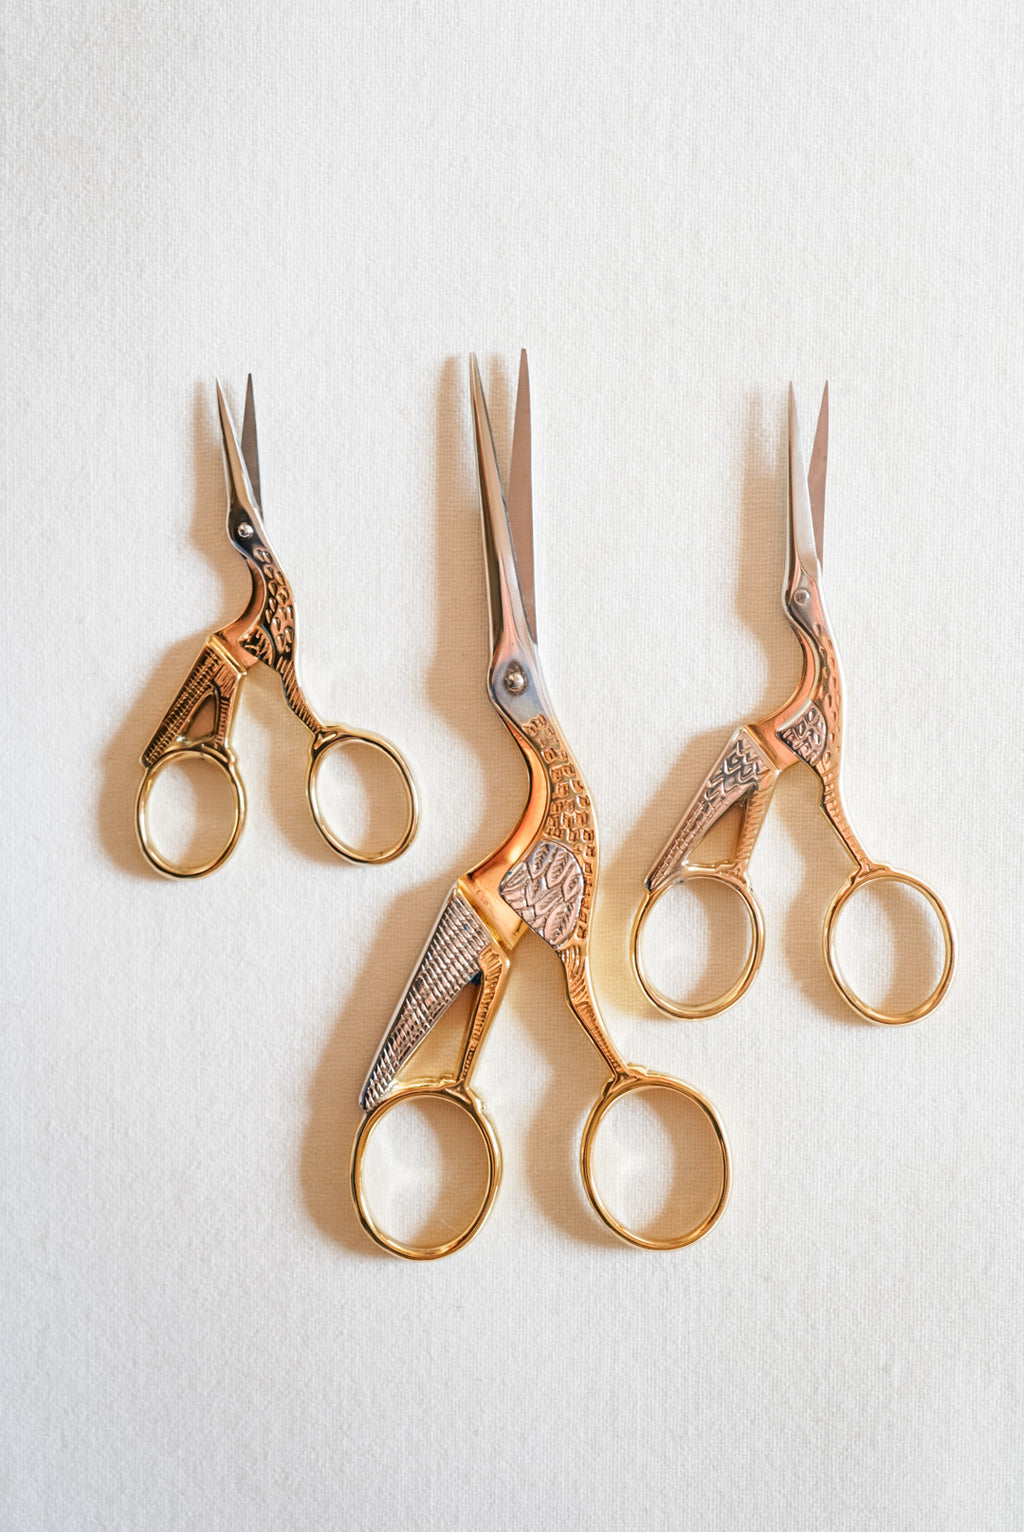 Embroidery Scissors - Colorful Mini Scissors - Shears - Mini Ribbon Scissors  - Cute Scissor - Mini Crane Scissors - Final Sale